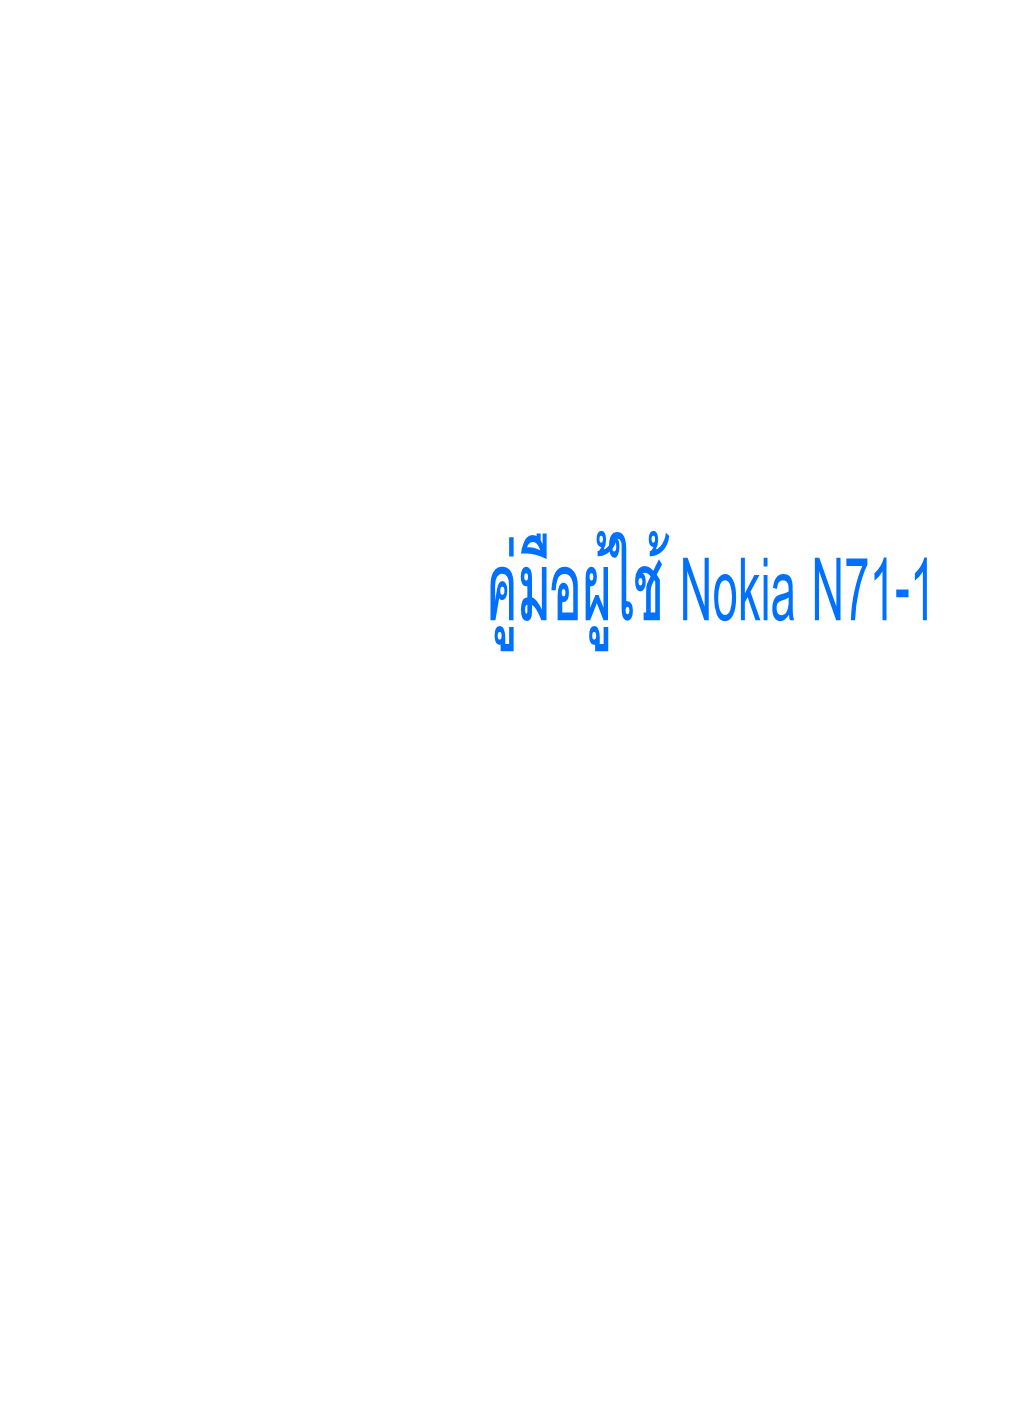 F F Fnokia N71-1